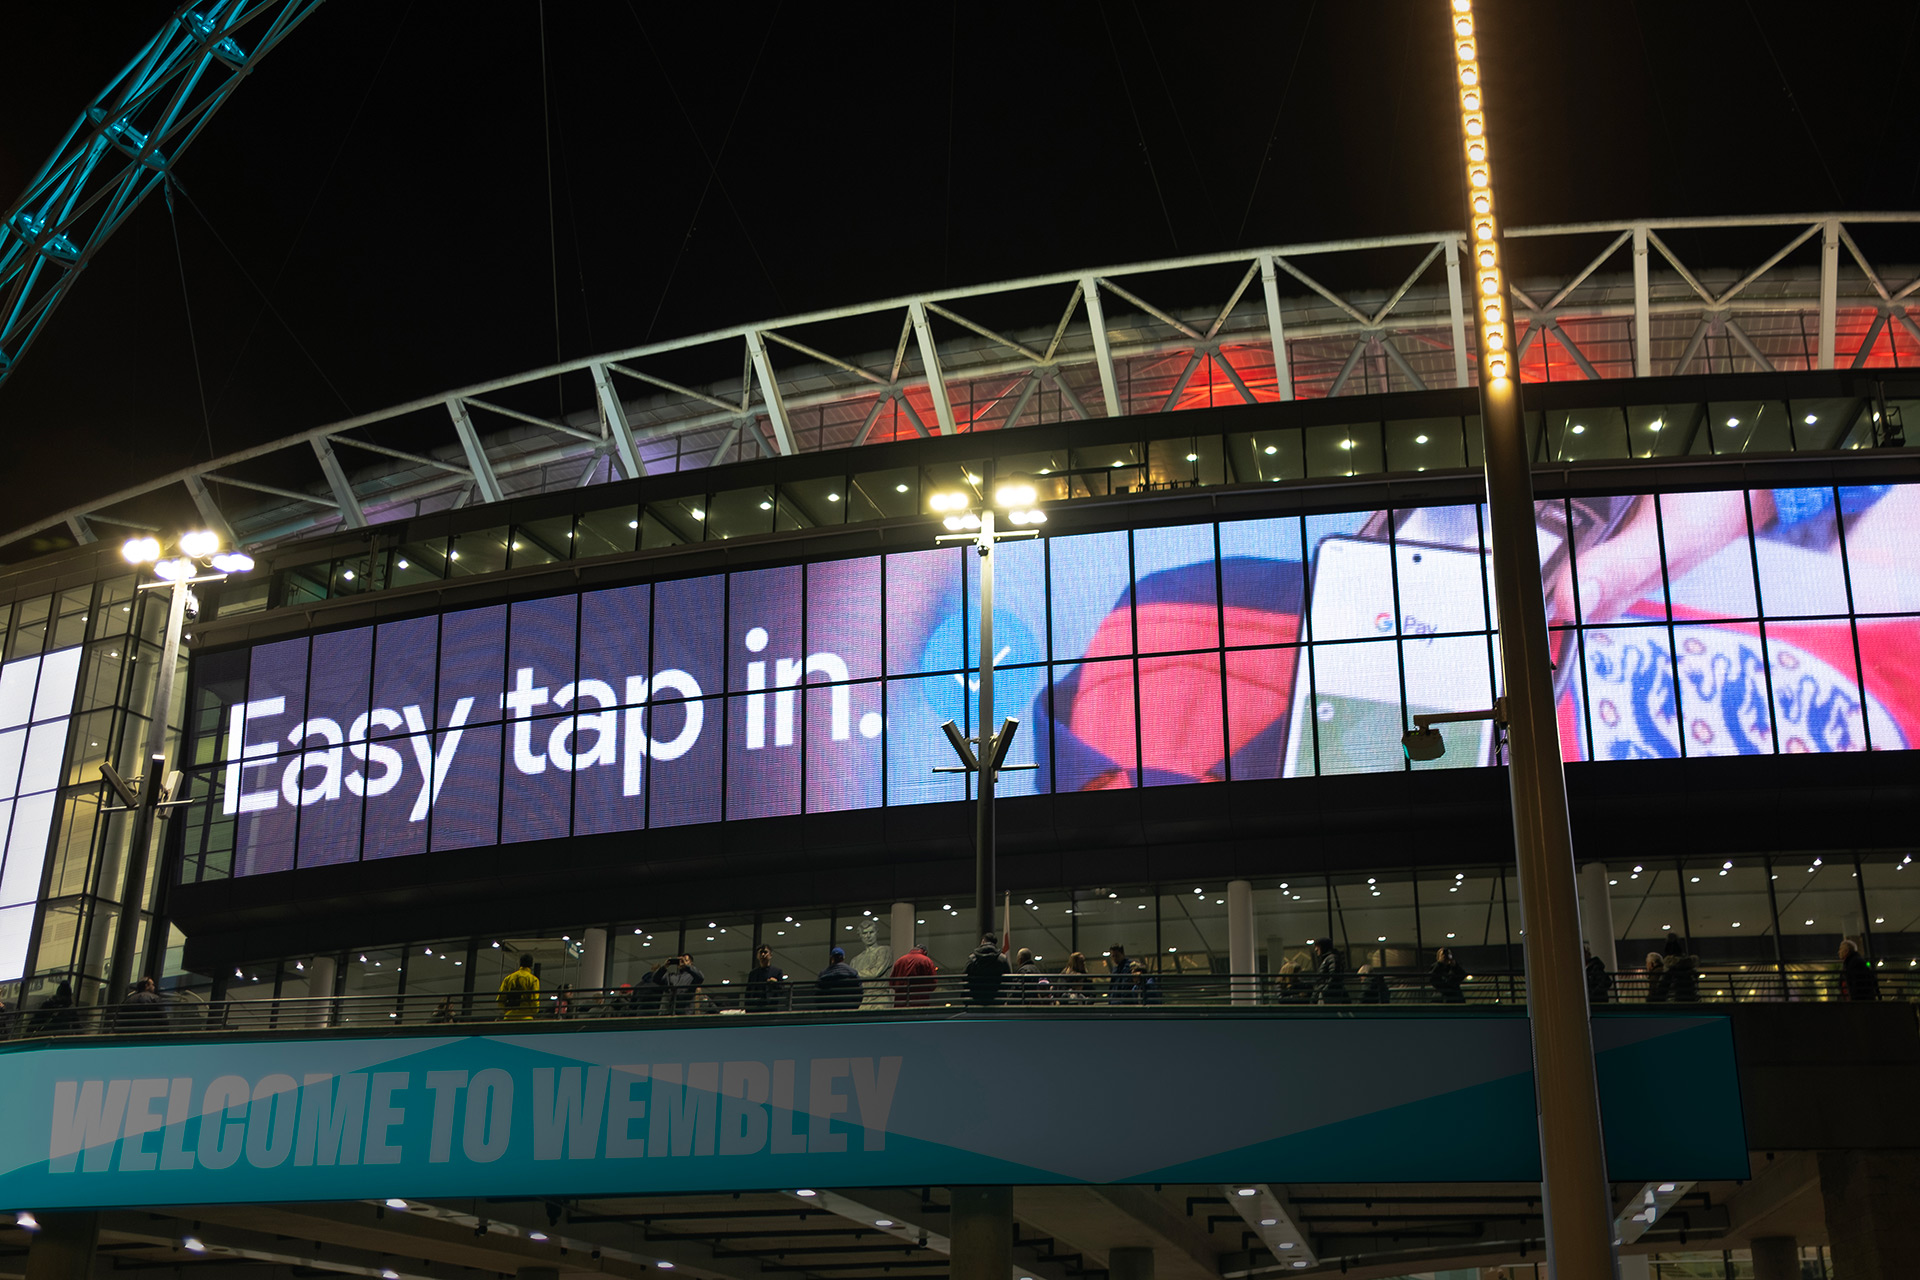 Outdoor screen at Wembley Stadium displaying a GPay advert